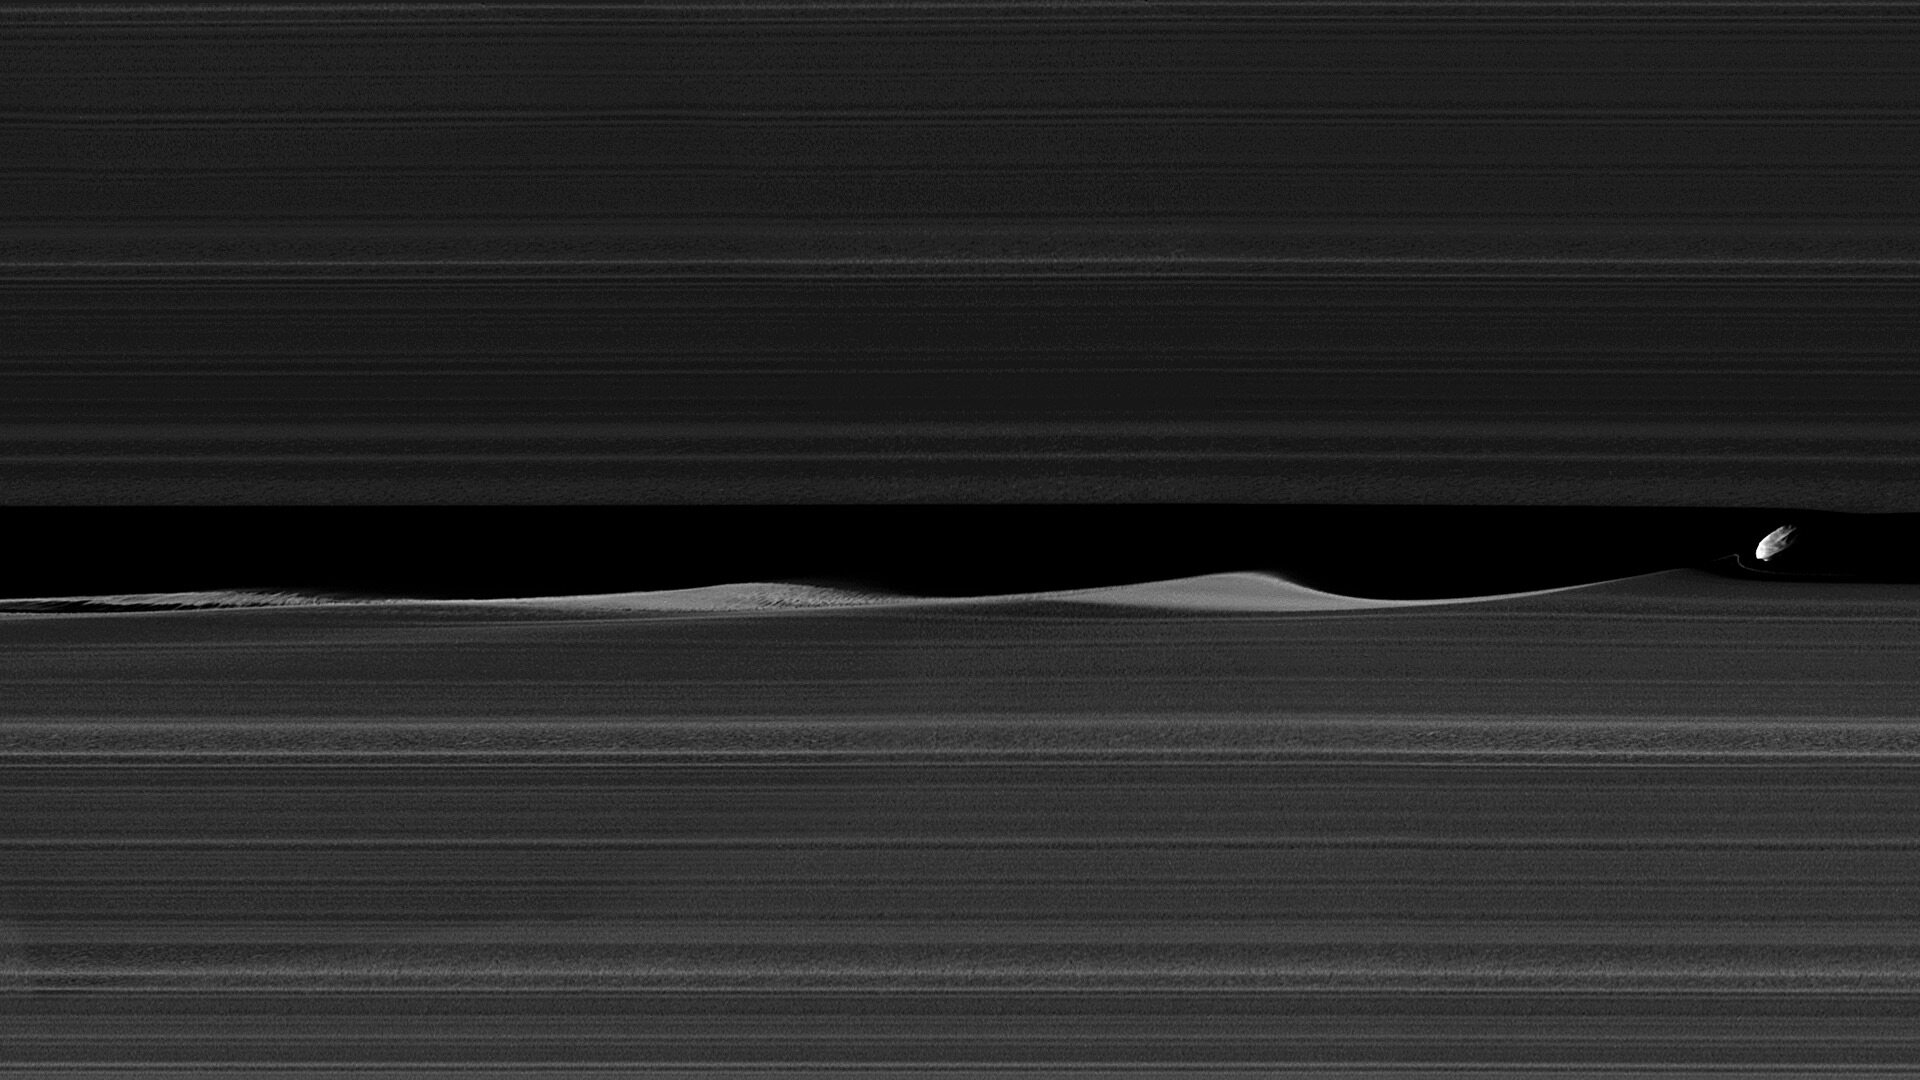 Saturn’s moon Daphnis in the Keeler Gap